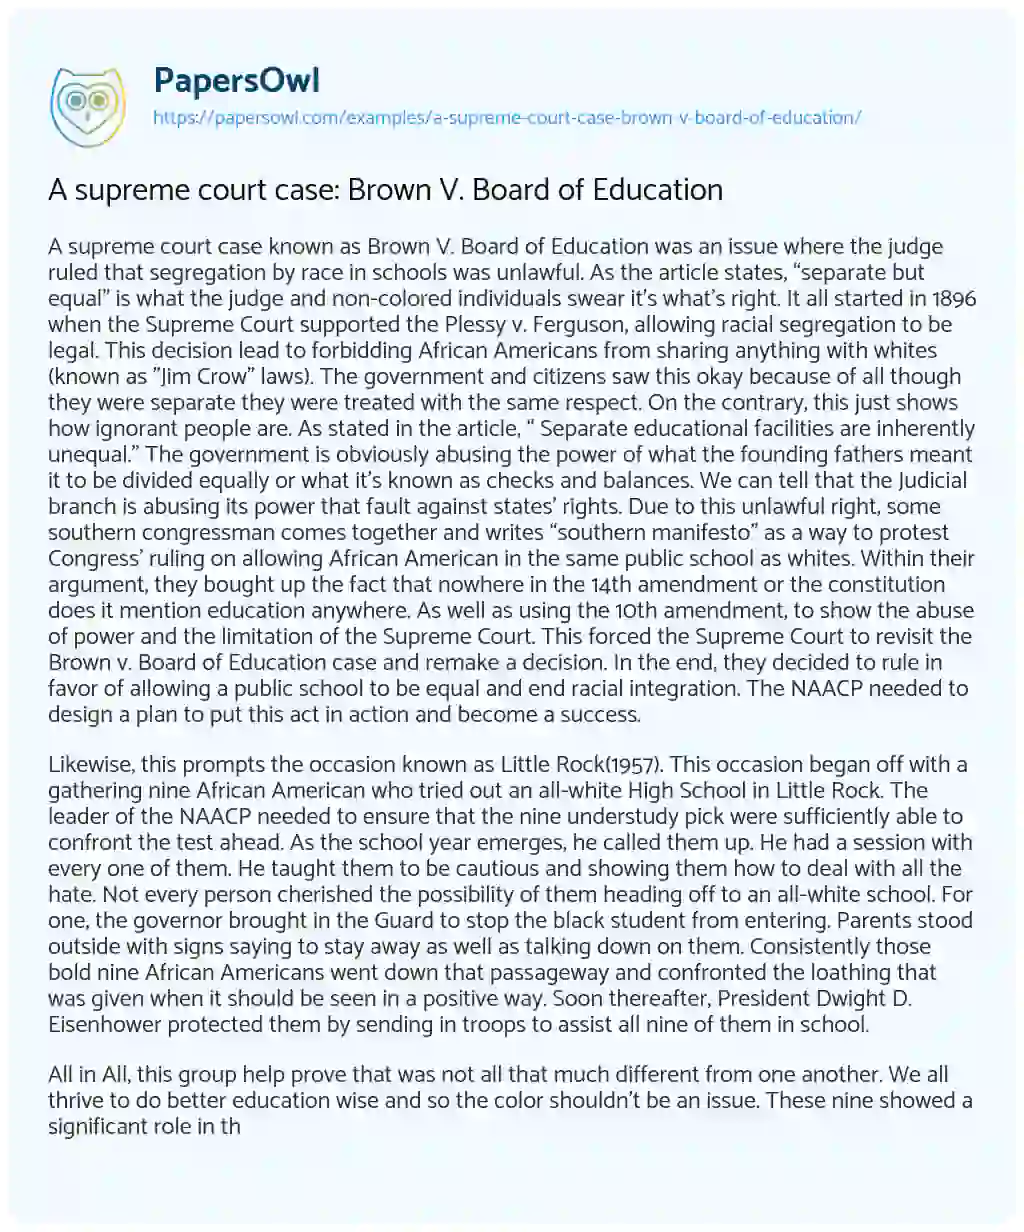 Essay on A Supreme Court Case: Brown V. Board of Education